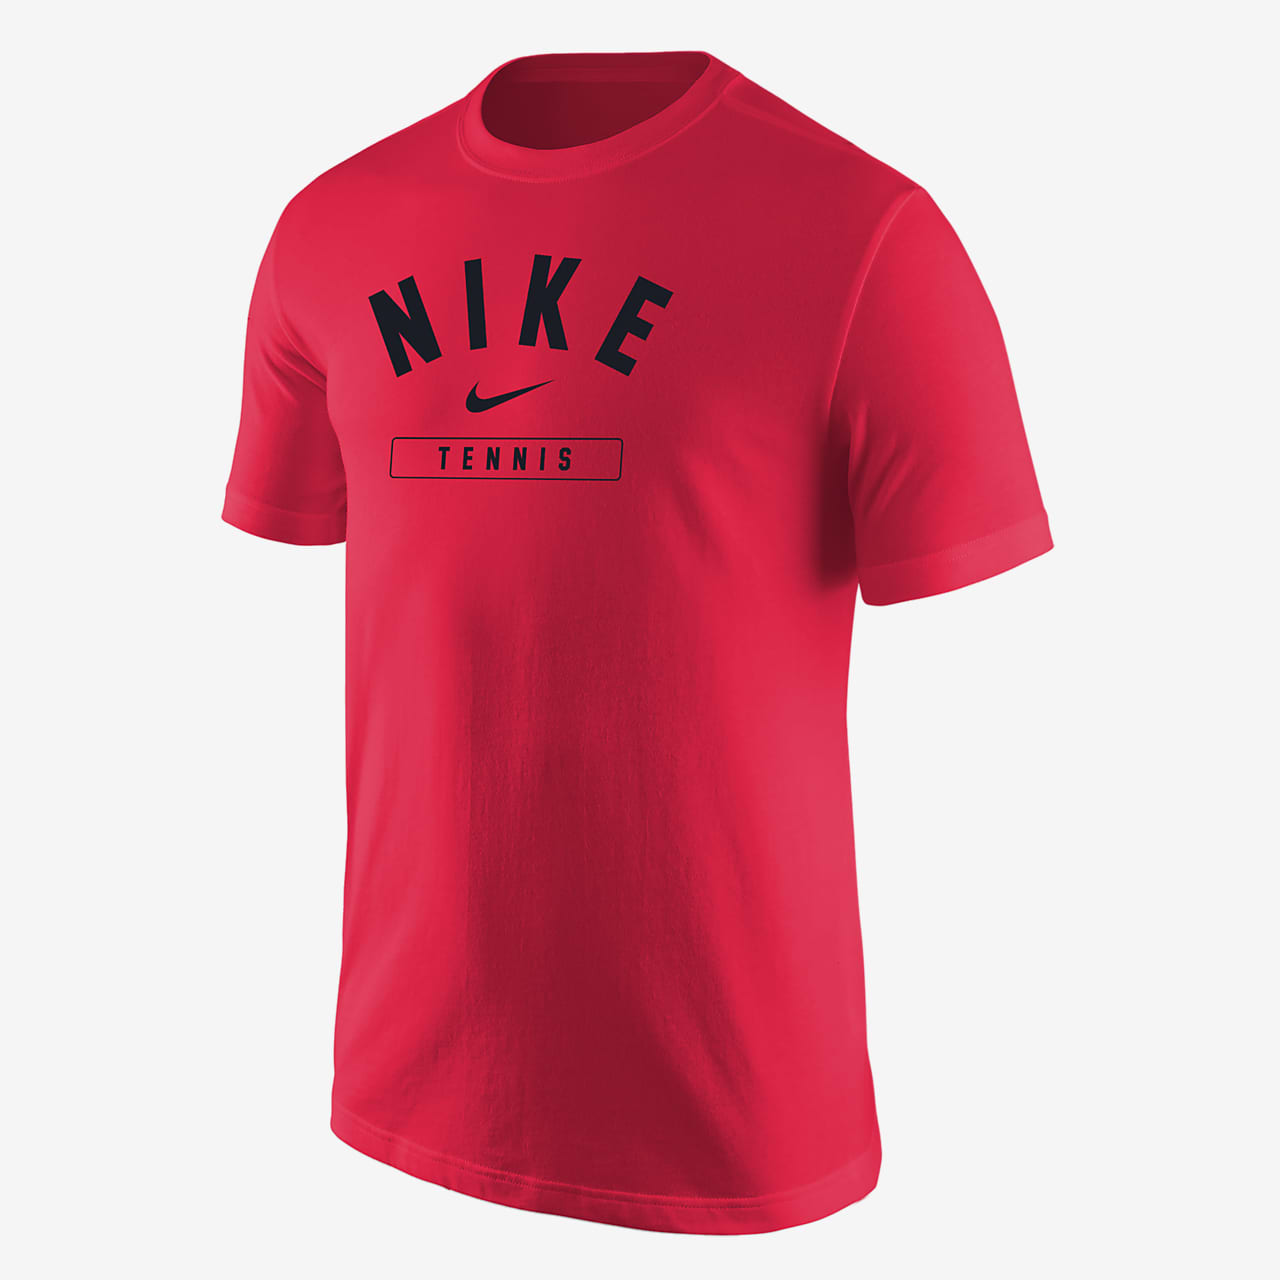 rundvlees Reserve Gemaakt van Nike Tennis Men's T-Shirt. Nike.com